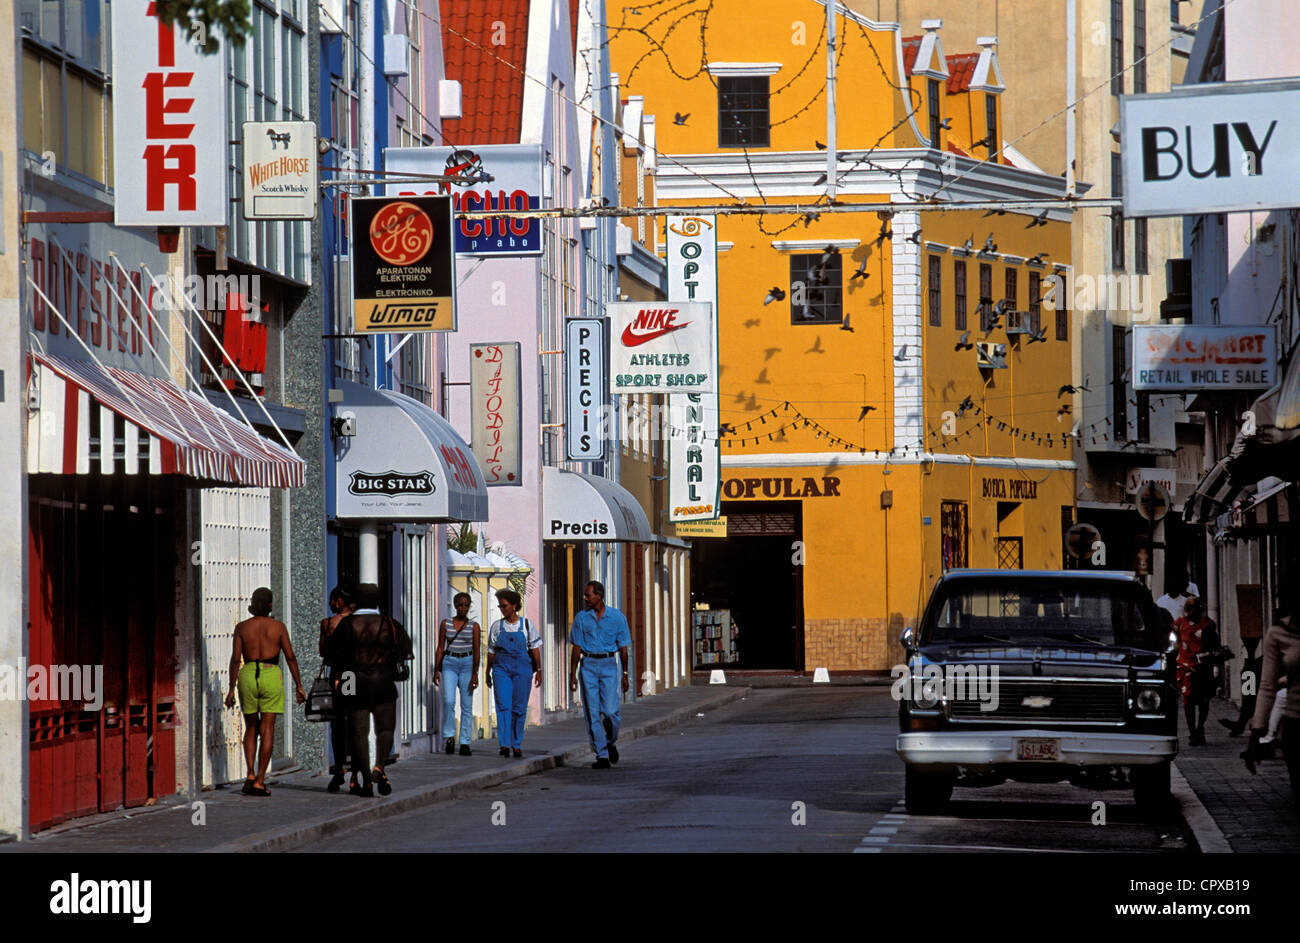 Netherland Antilles, Curacao island, Willemstad city Stock Photo